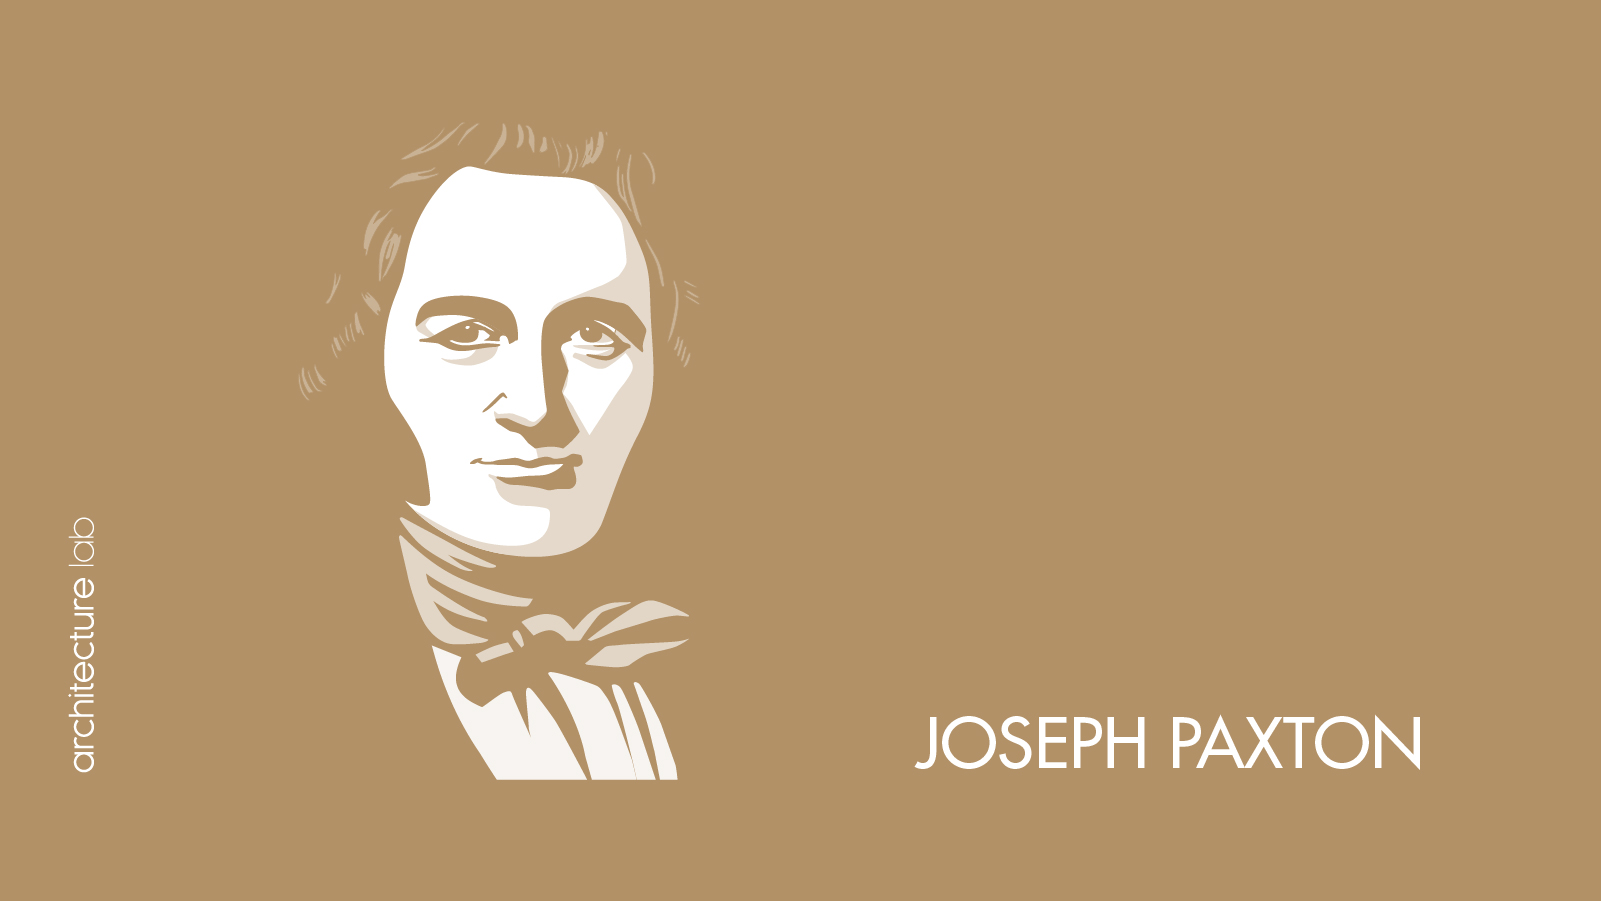 3. Joseph paxton